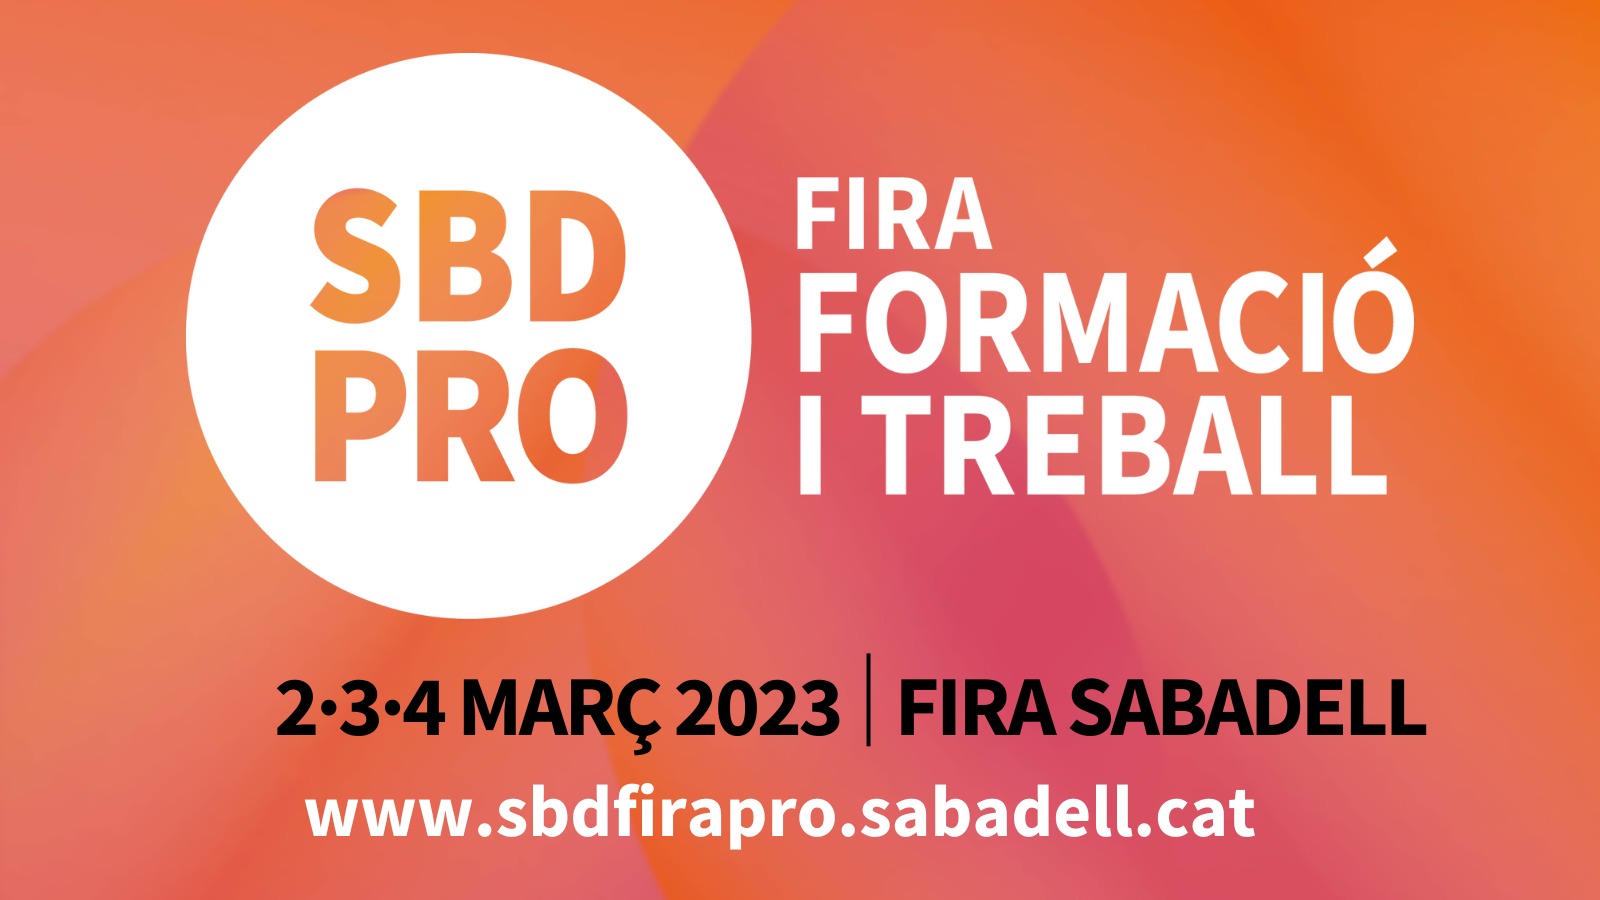 SBD Fira PRO: Formació i Treball s’inaugura demà a Fira Sabadell 